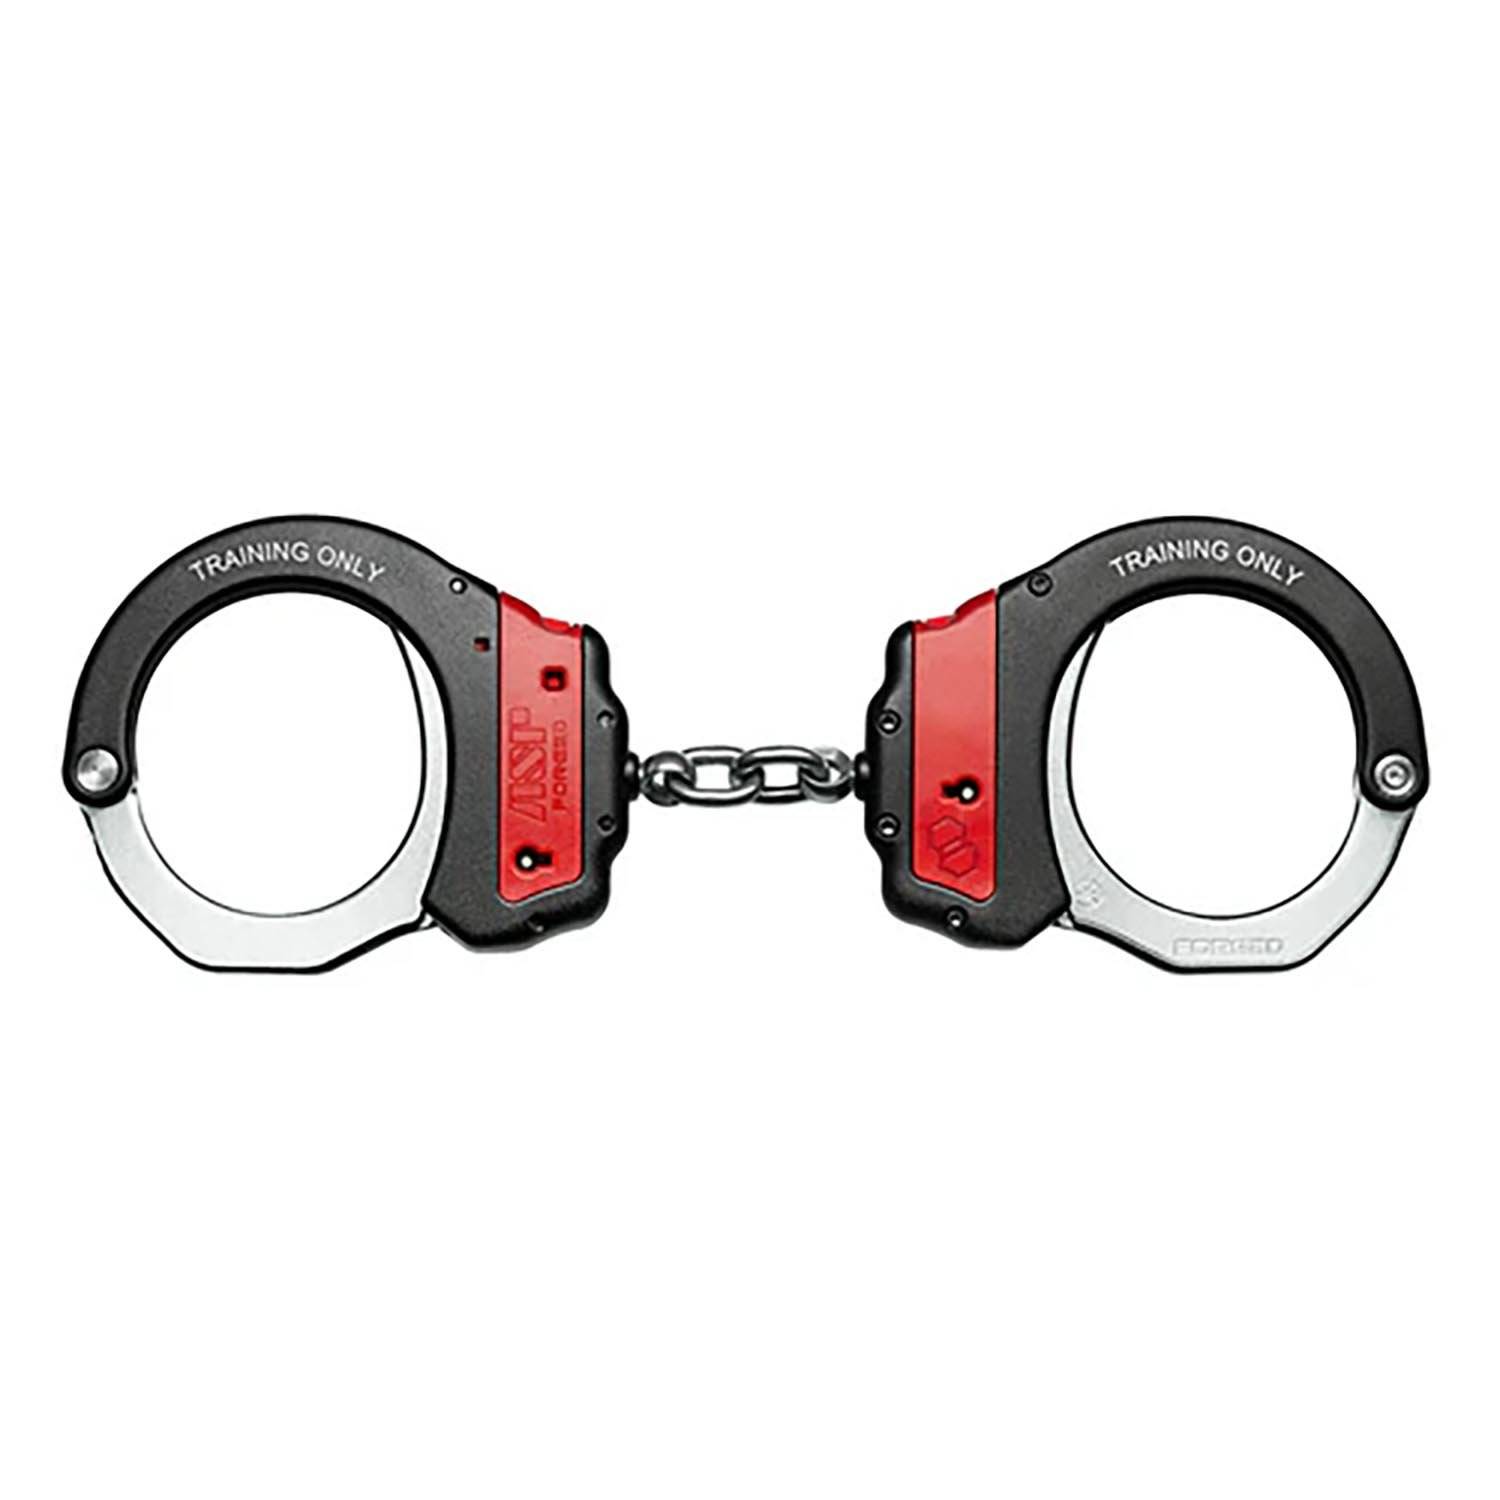 ASP Ultra Plus Chain Training Handcuffs